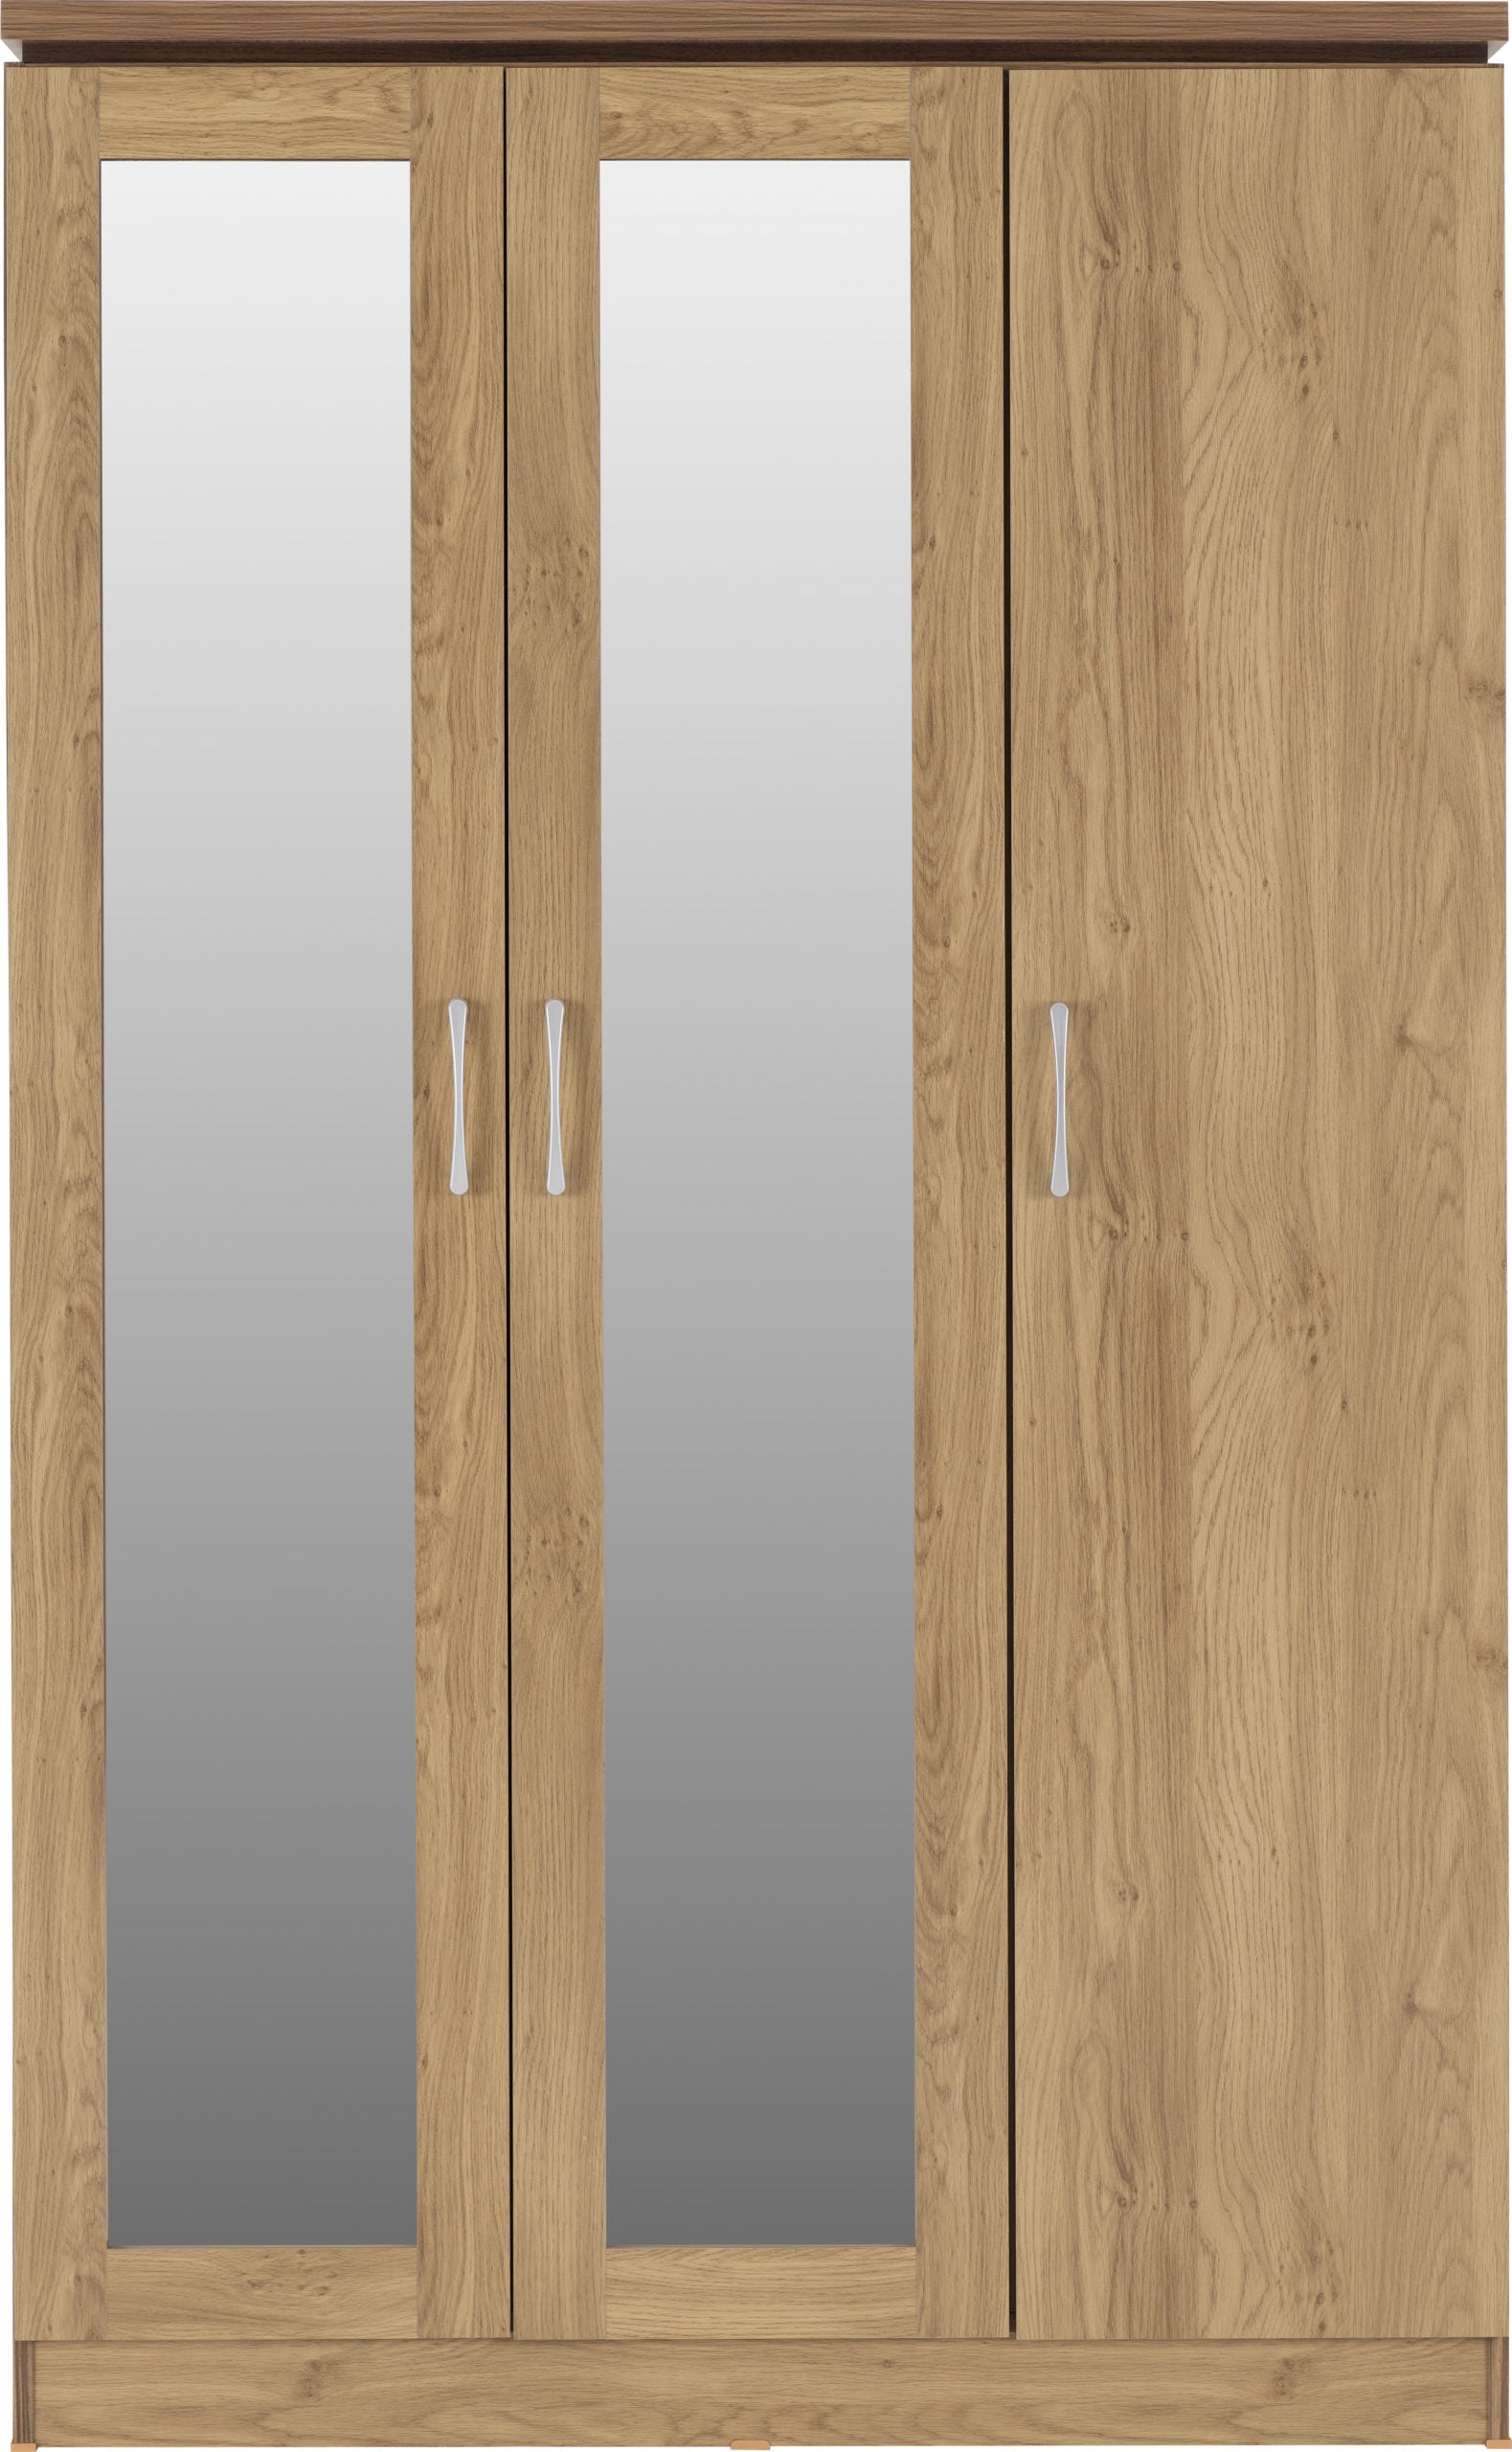 Charles 3 Door All Hanging Wardrobe - Oak Effect Veneer with Walnut Trim